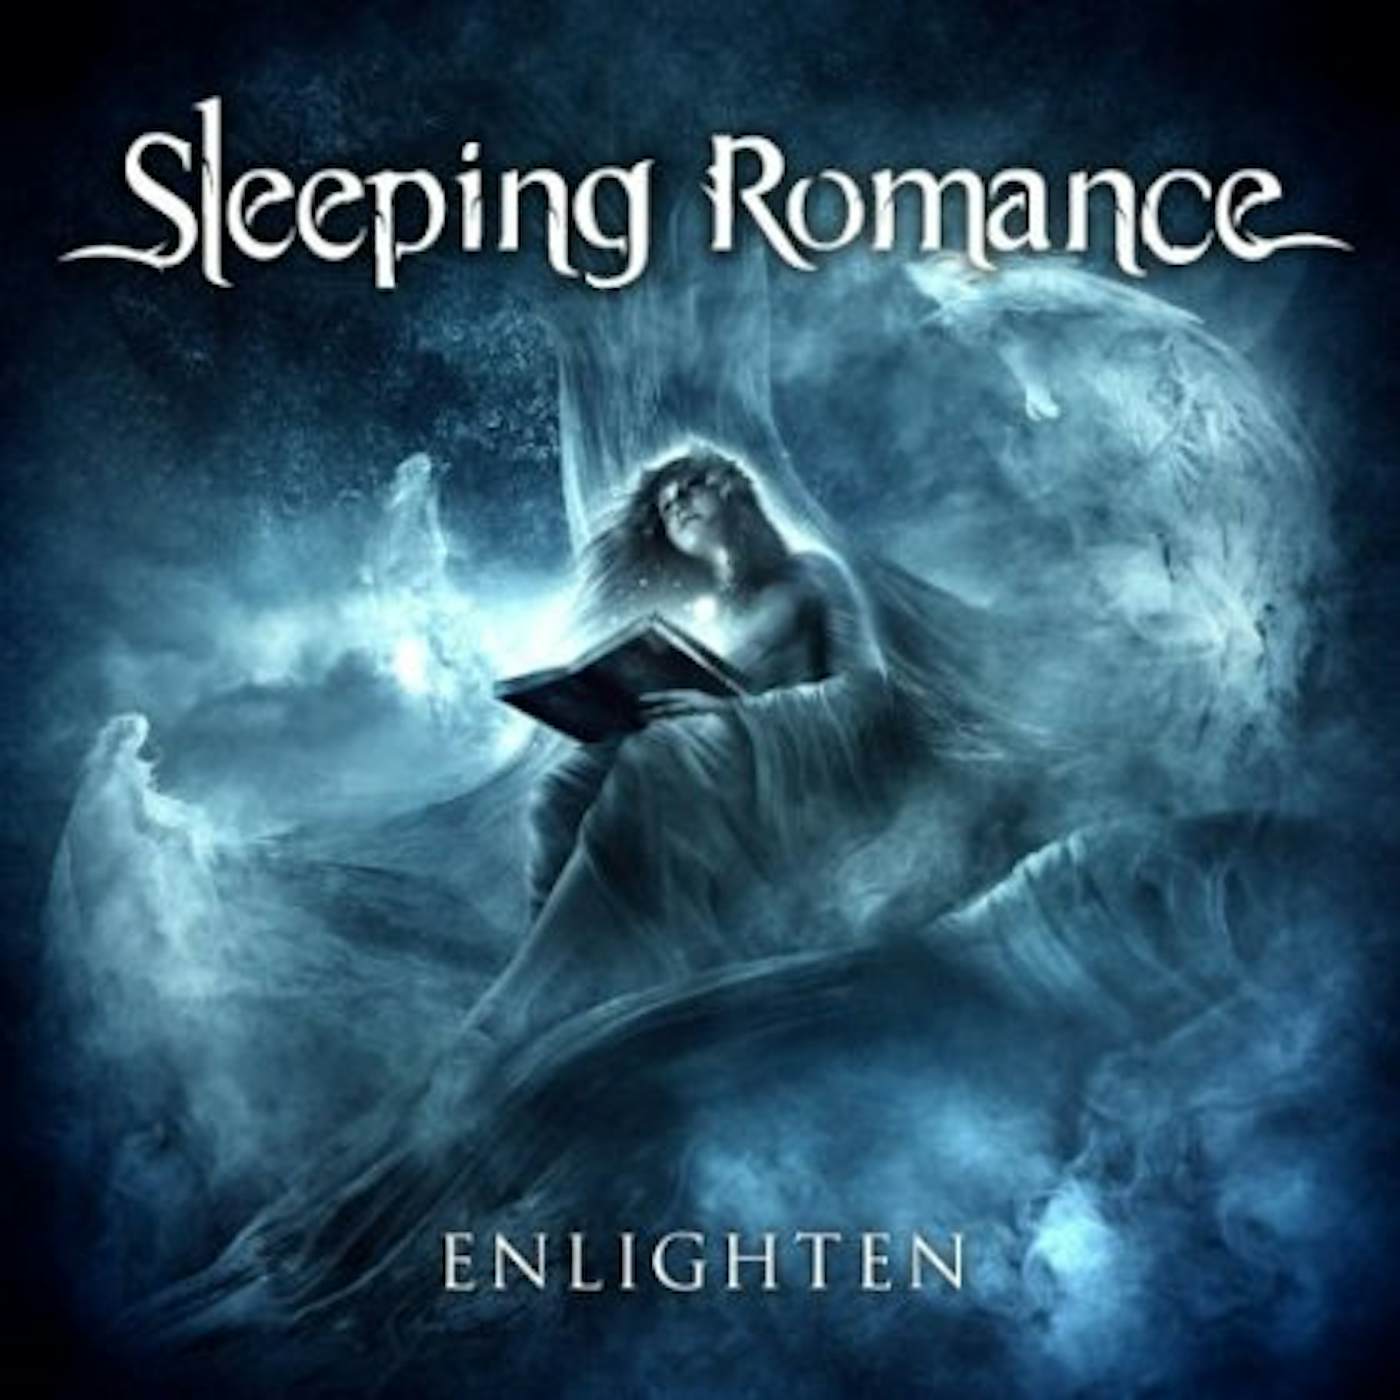 Sleeping Romance ENLIGHTEN CD